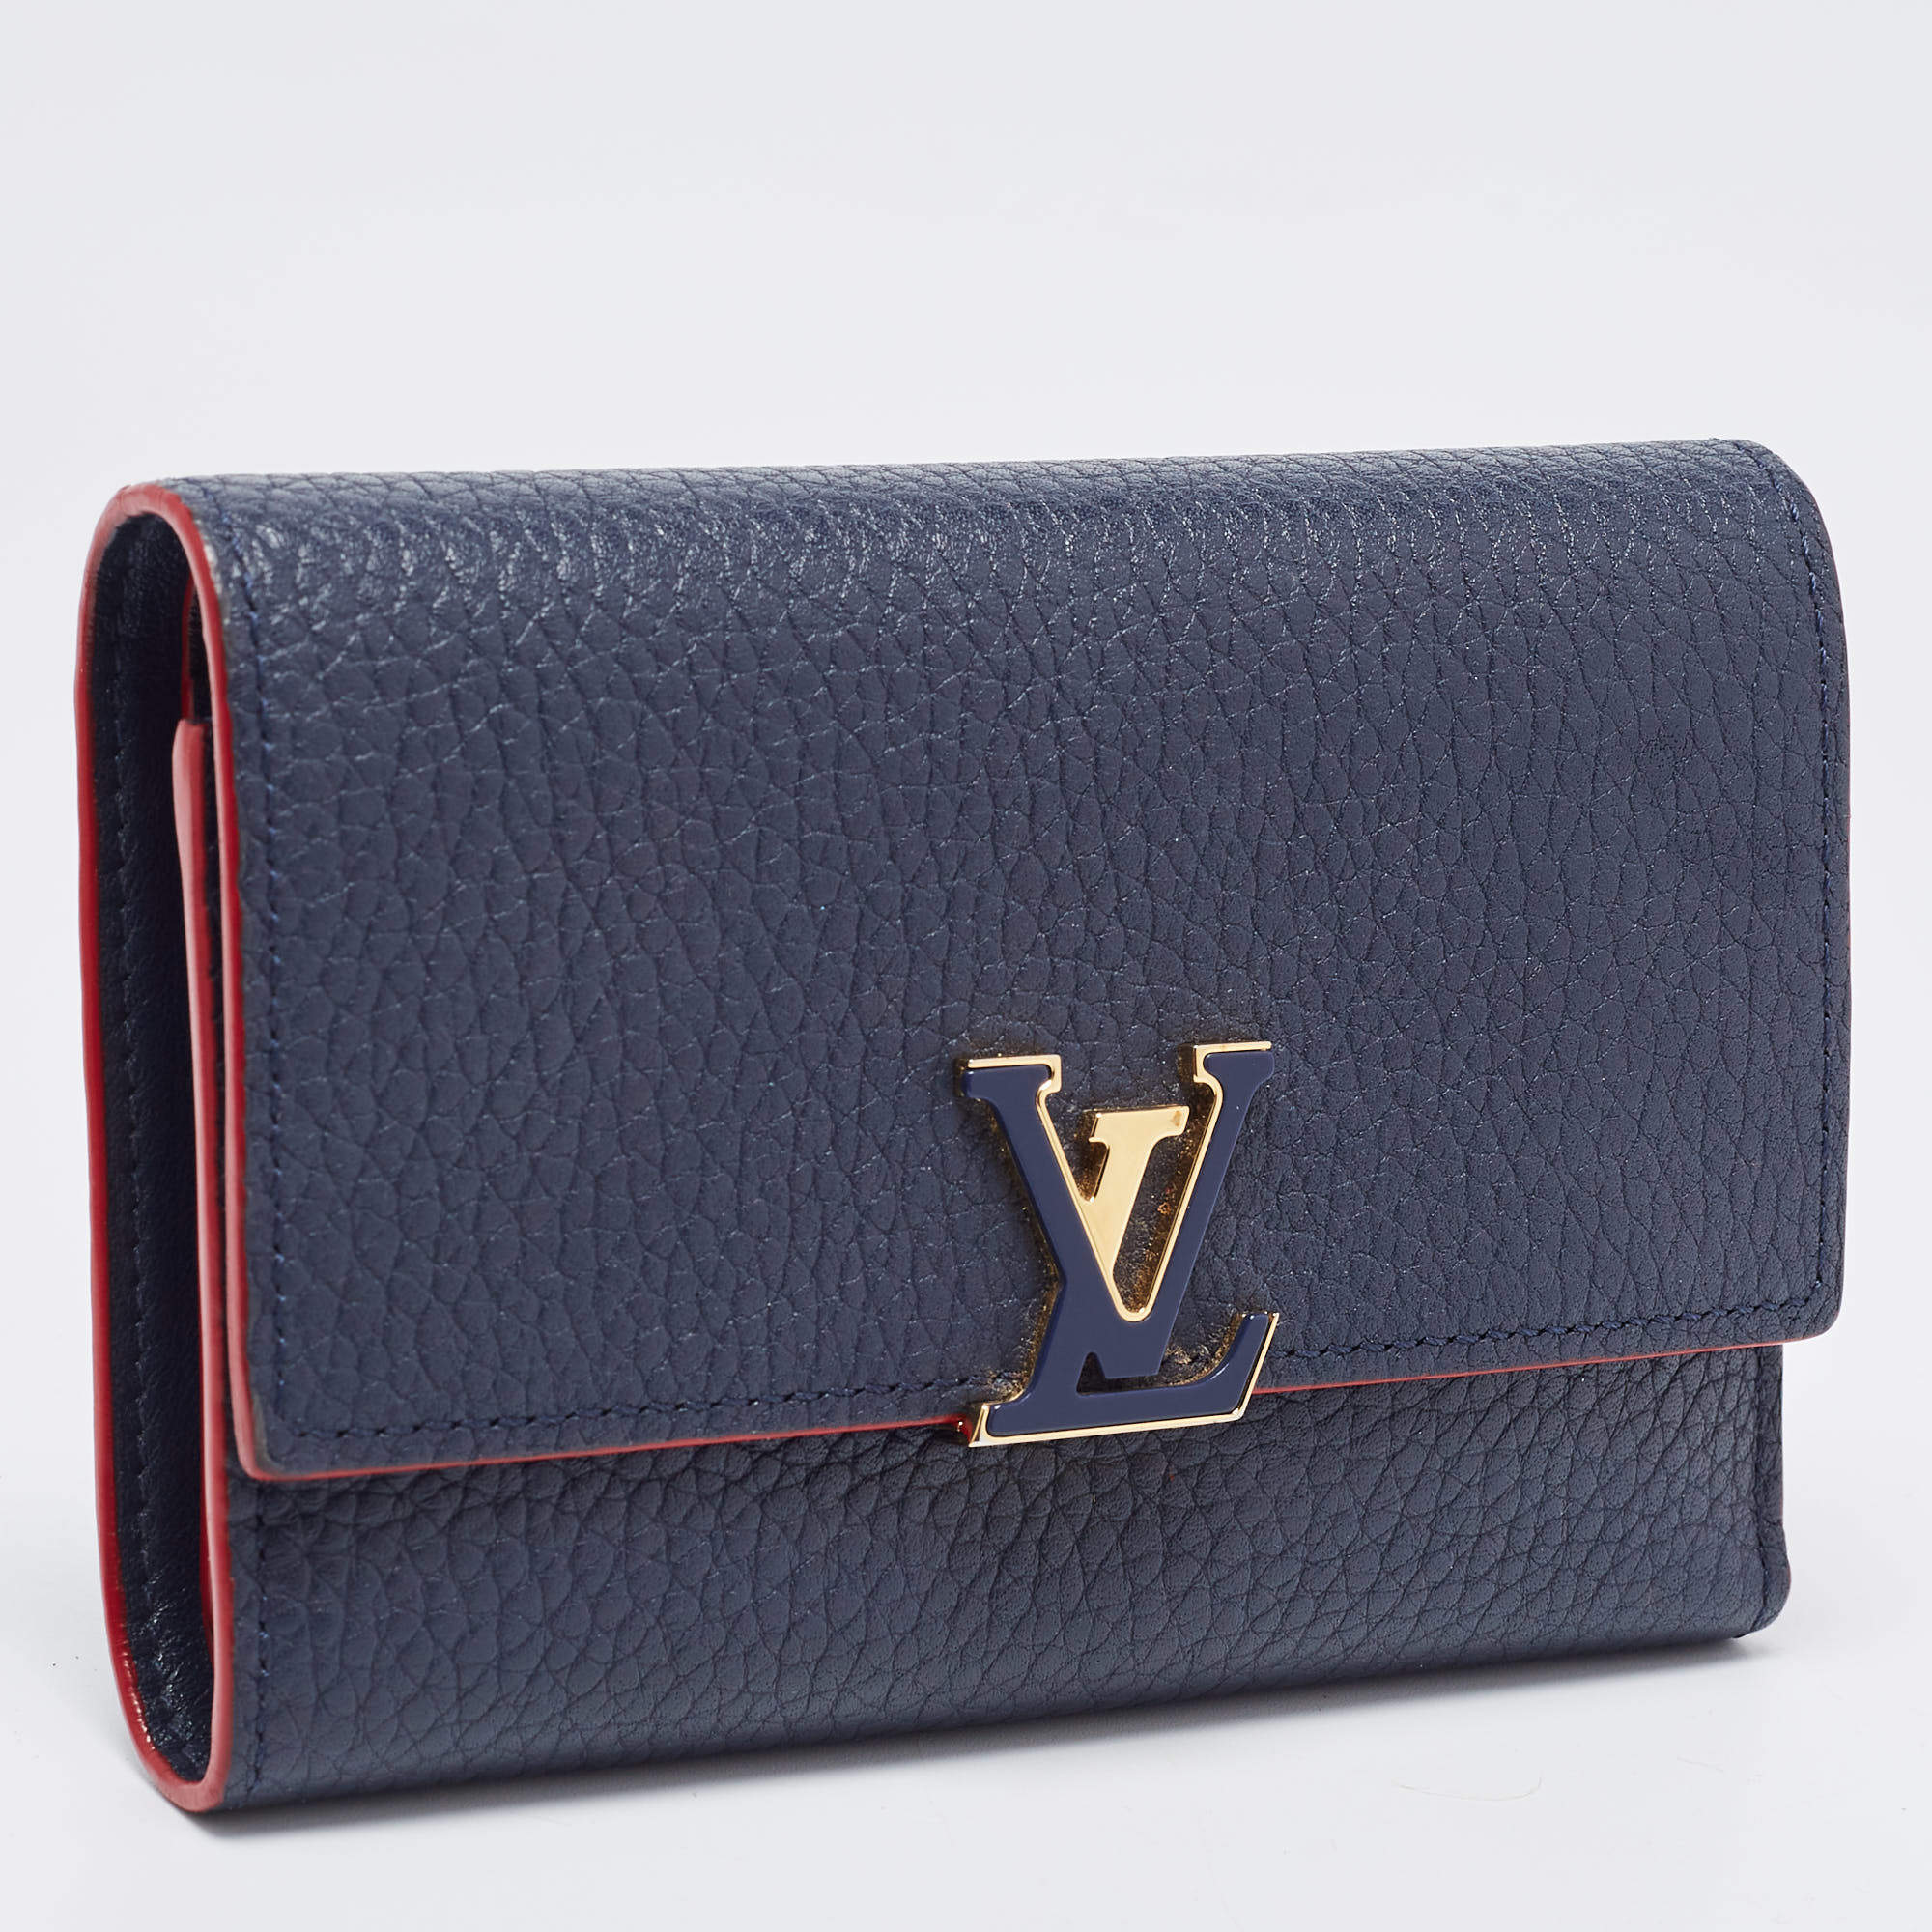 Louis Vuitton Capucines wallet Color Magnolia